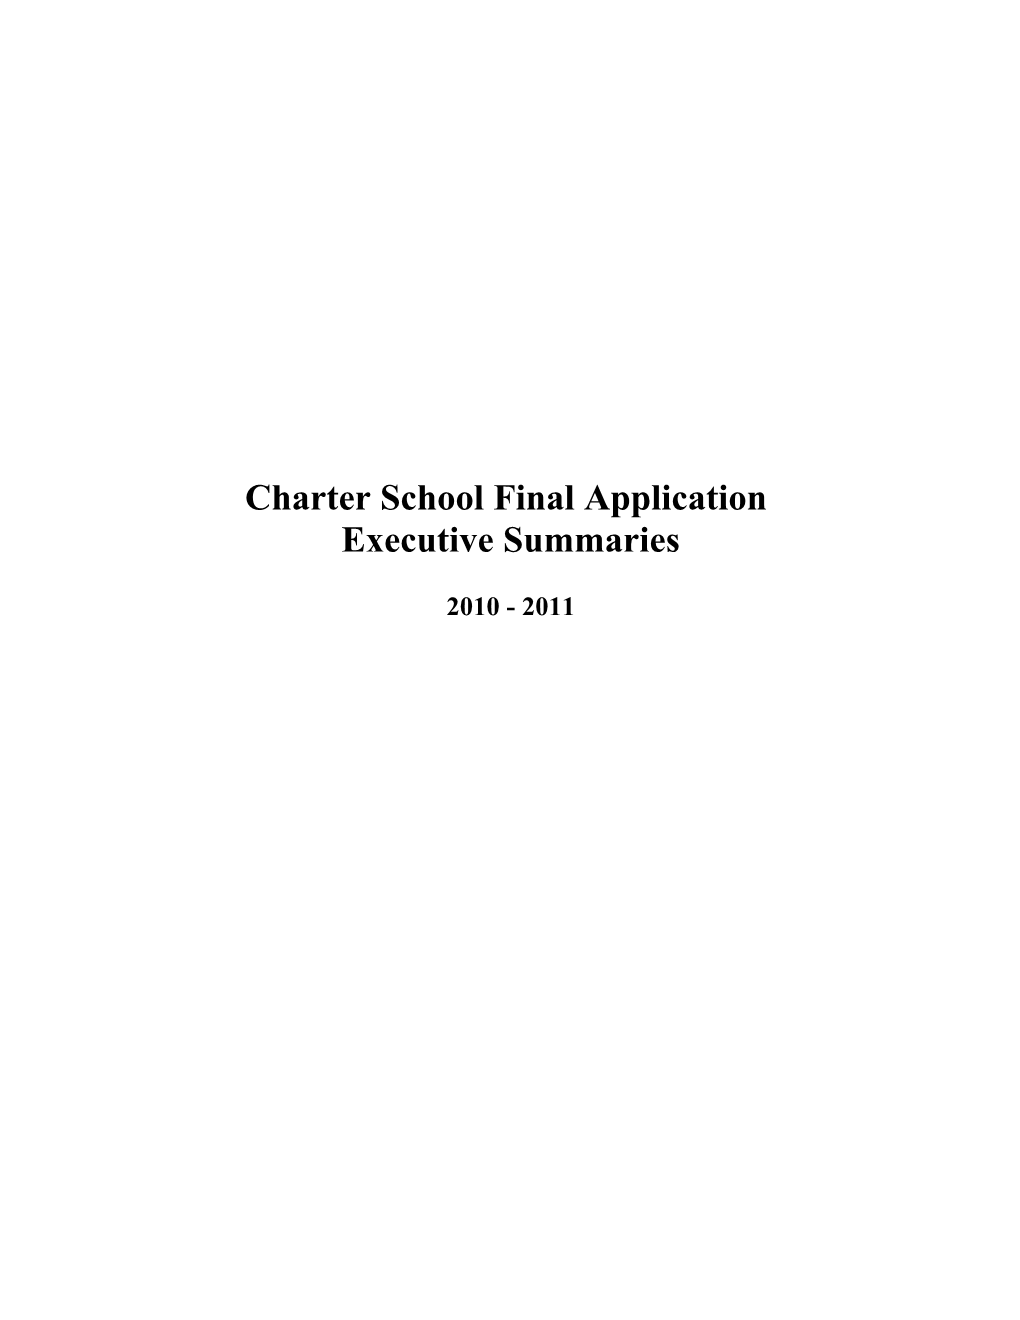 Charter School Final Application Executive Summaries, January 2011